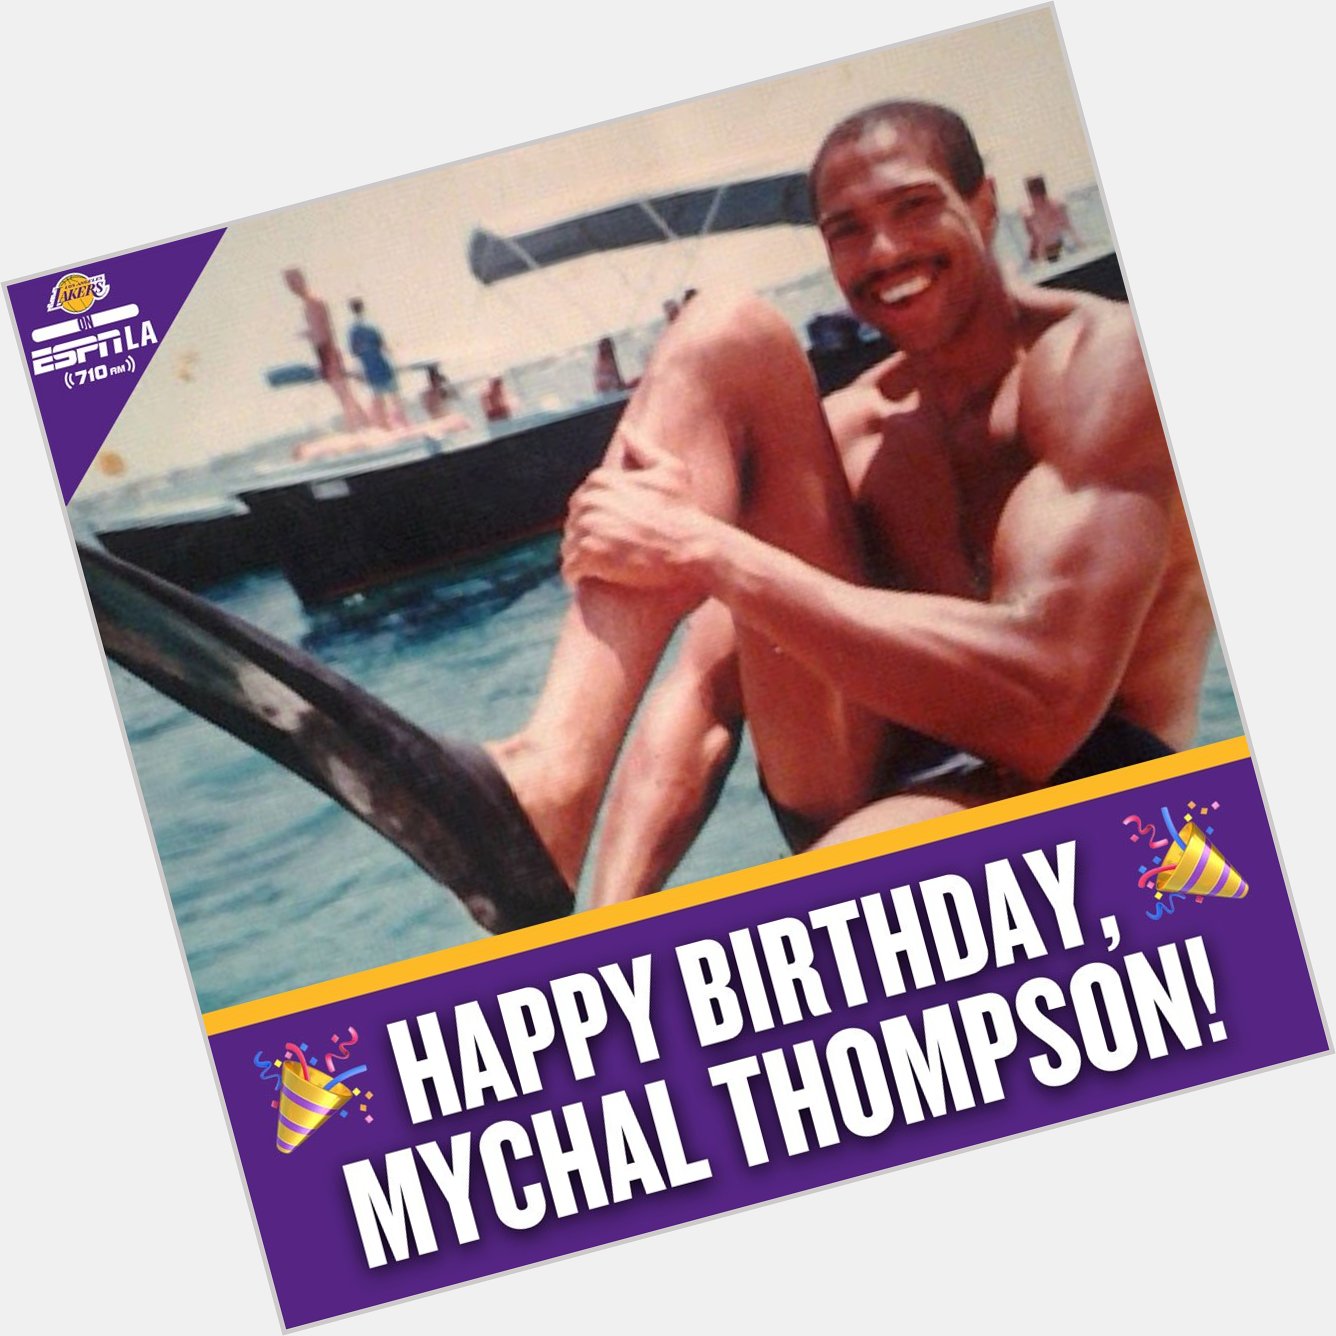 Happy birthday, Mychal Thompson  joins now on 710 AM ESPN  